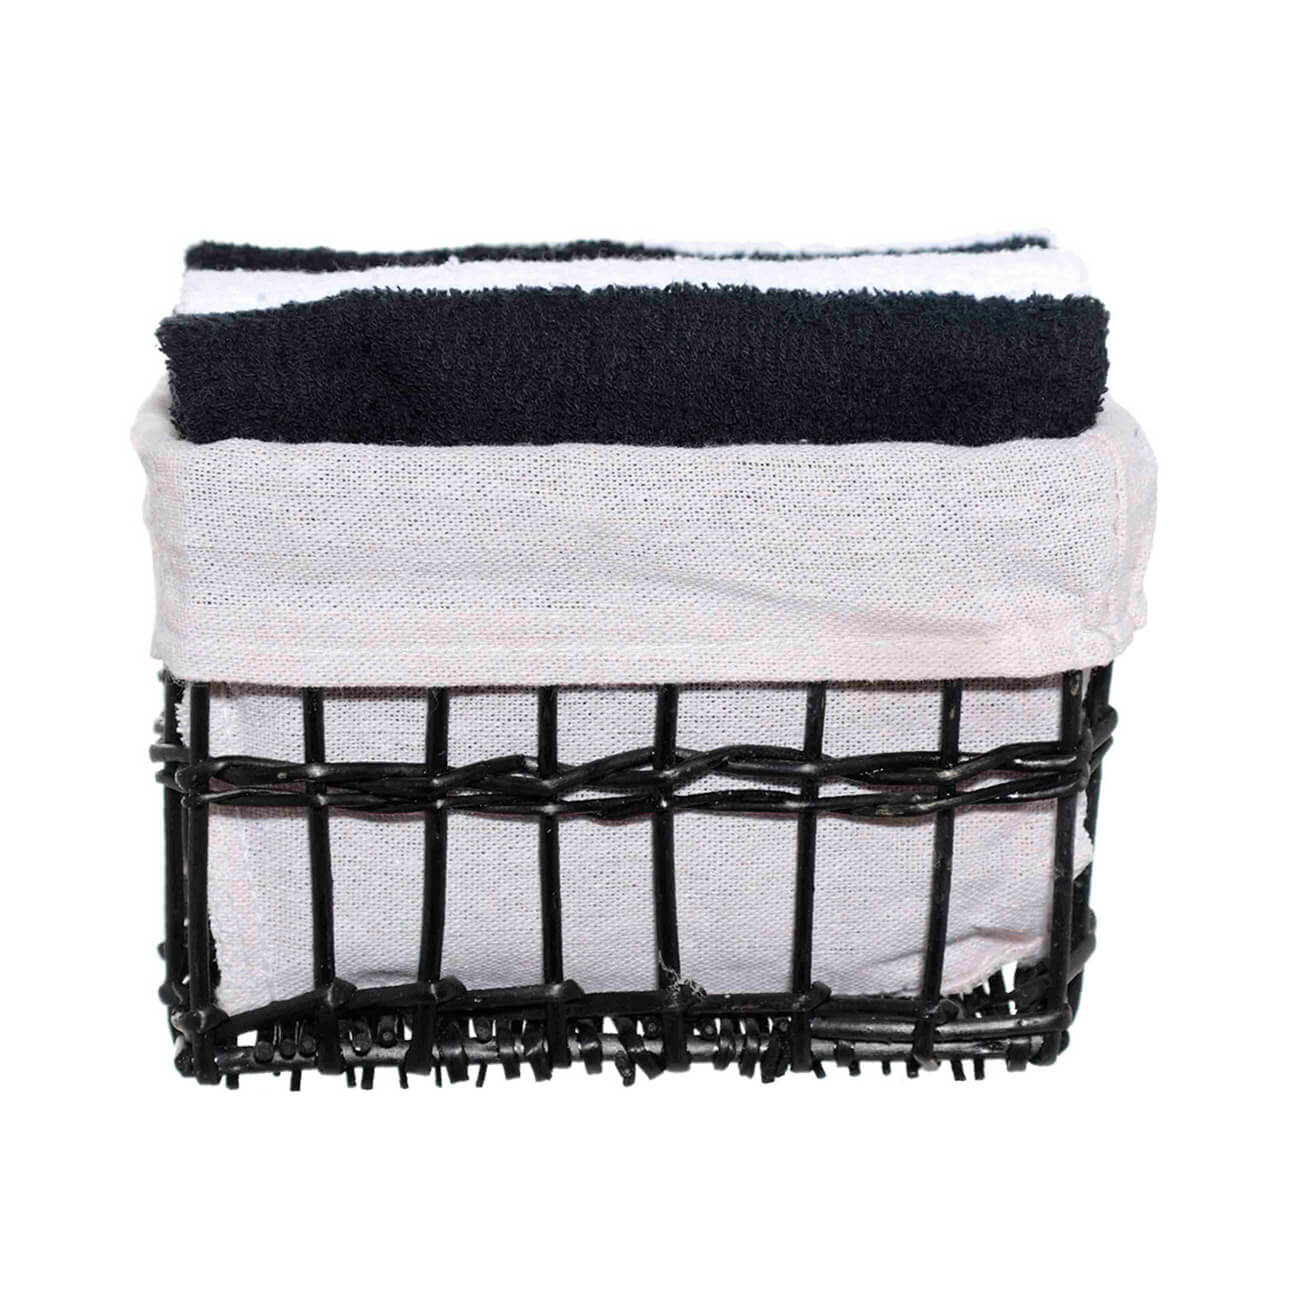 Полотенце, 30х30 см, 4 шт, в корзине, хлопок/лоза, черное/белое, Basket towel полотенце 30х30 см 4 шт в корзине хлопок лоза черное белое basket towel